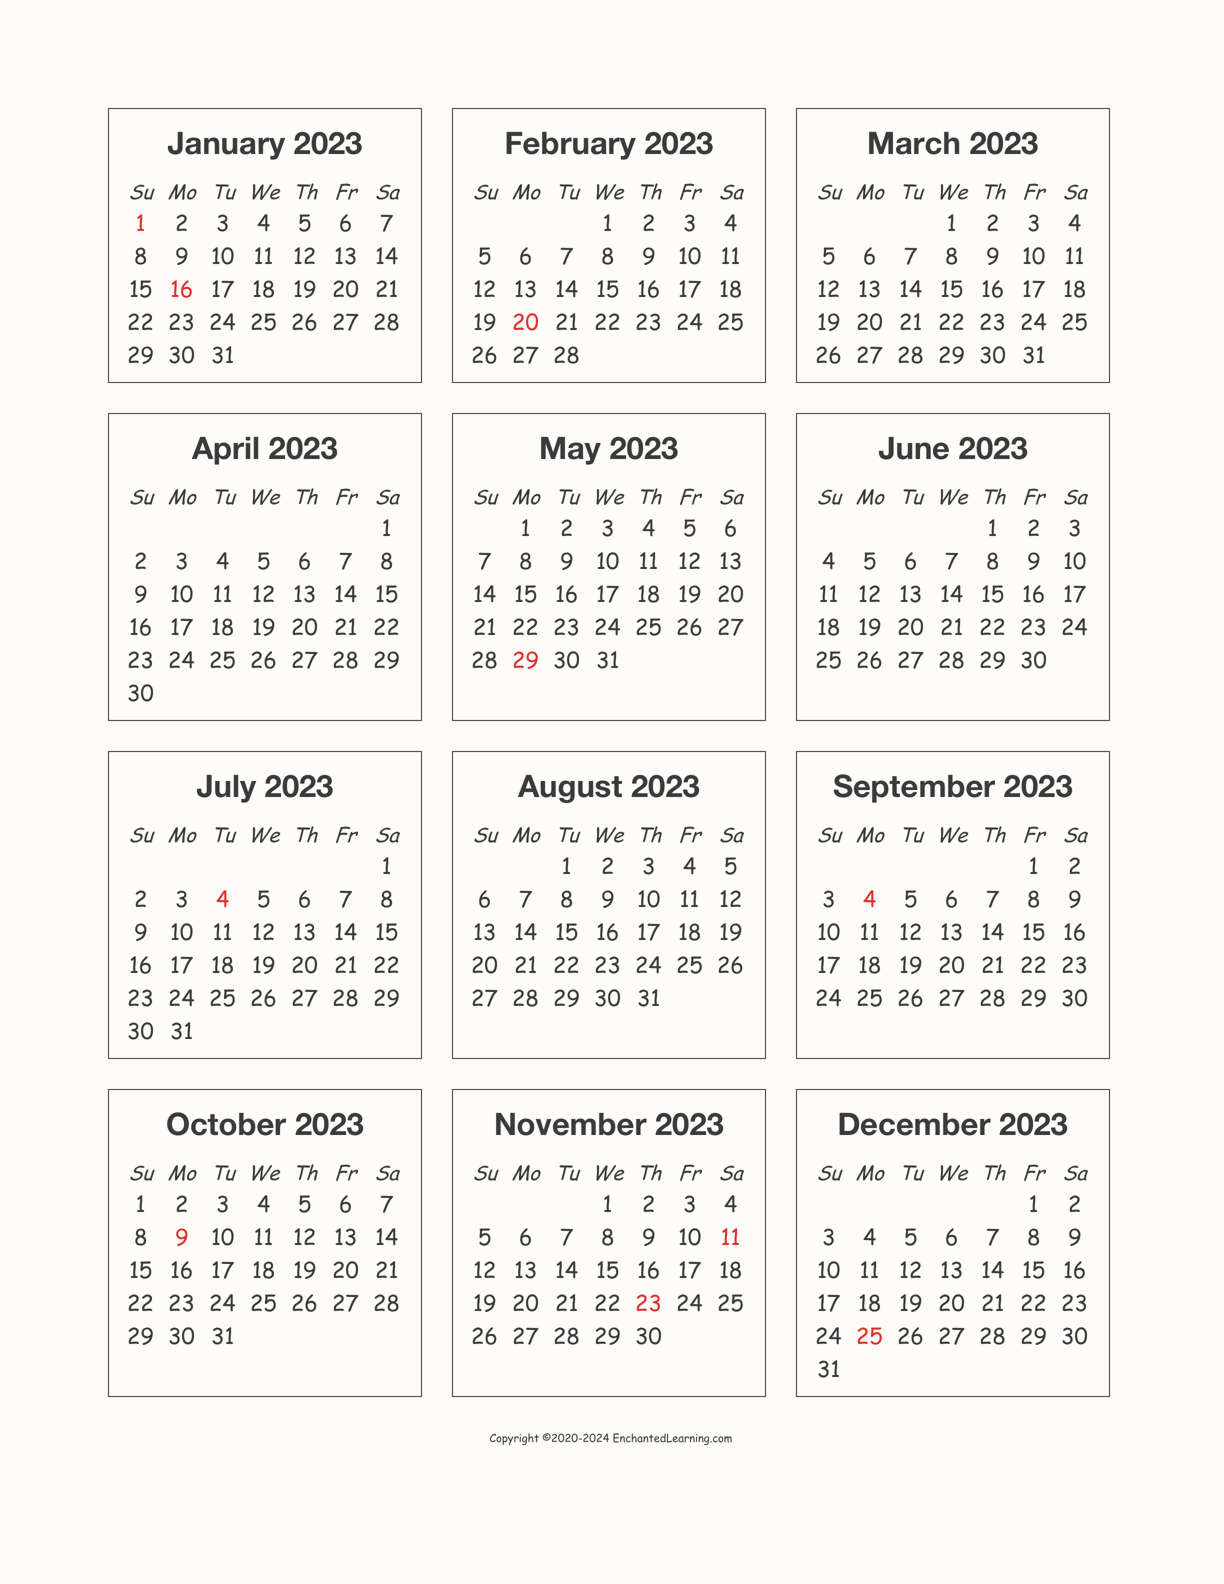 2023 OnePage Calendar Enchanted Learning